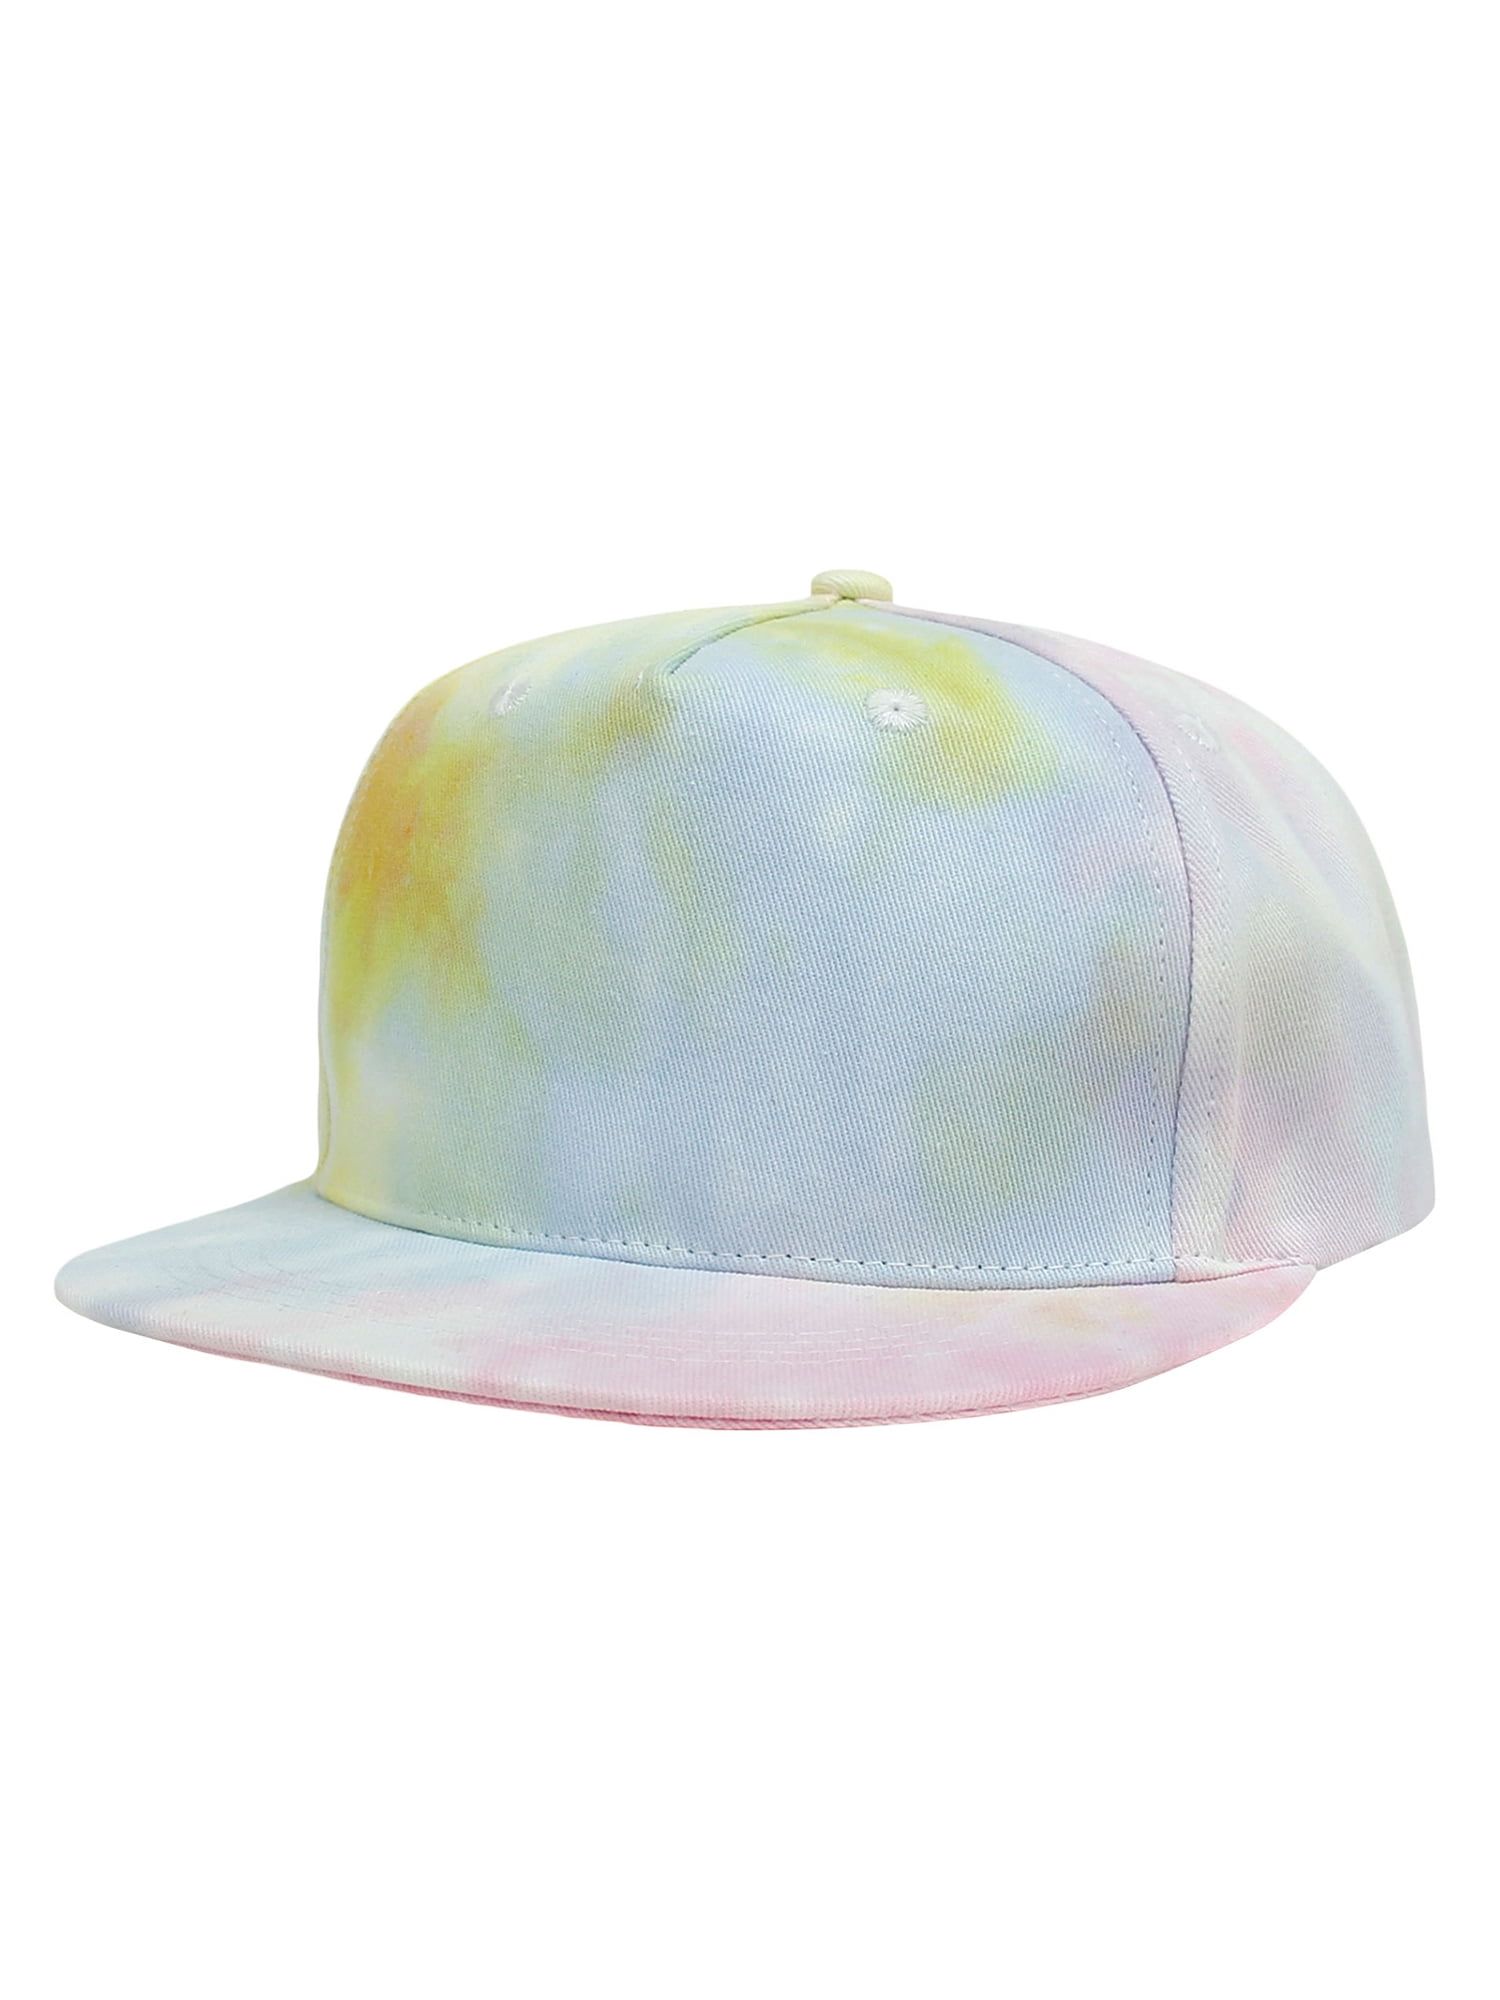 Kids Boys Girls Toddler Baseball Cap Hip Hop Sport Snapback Sun Hats Truker Hat 